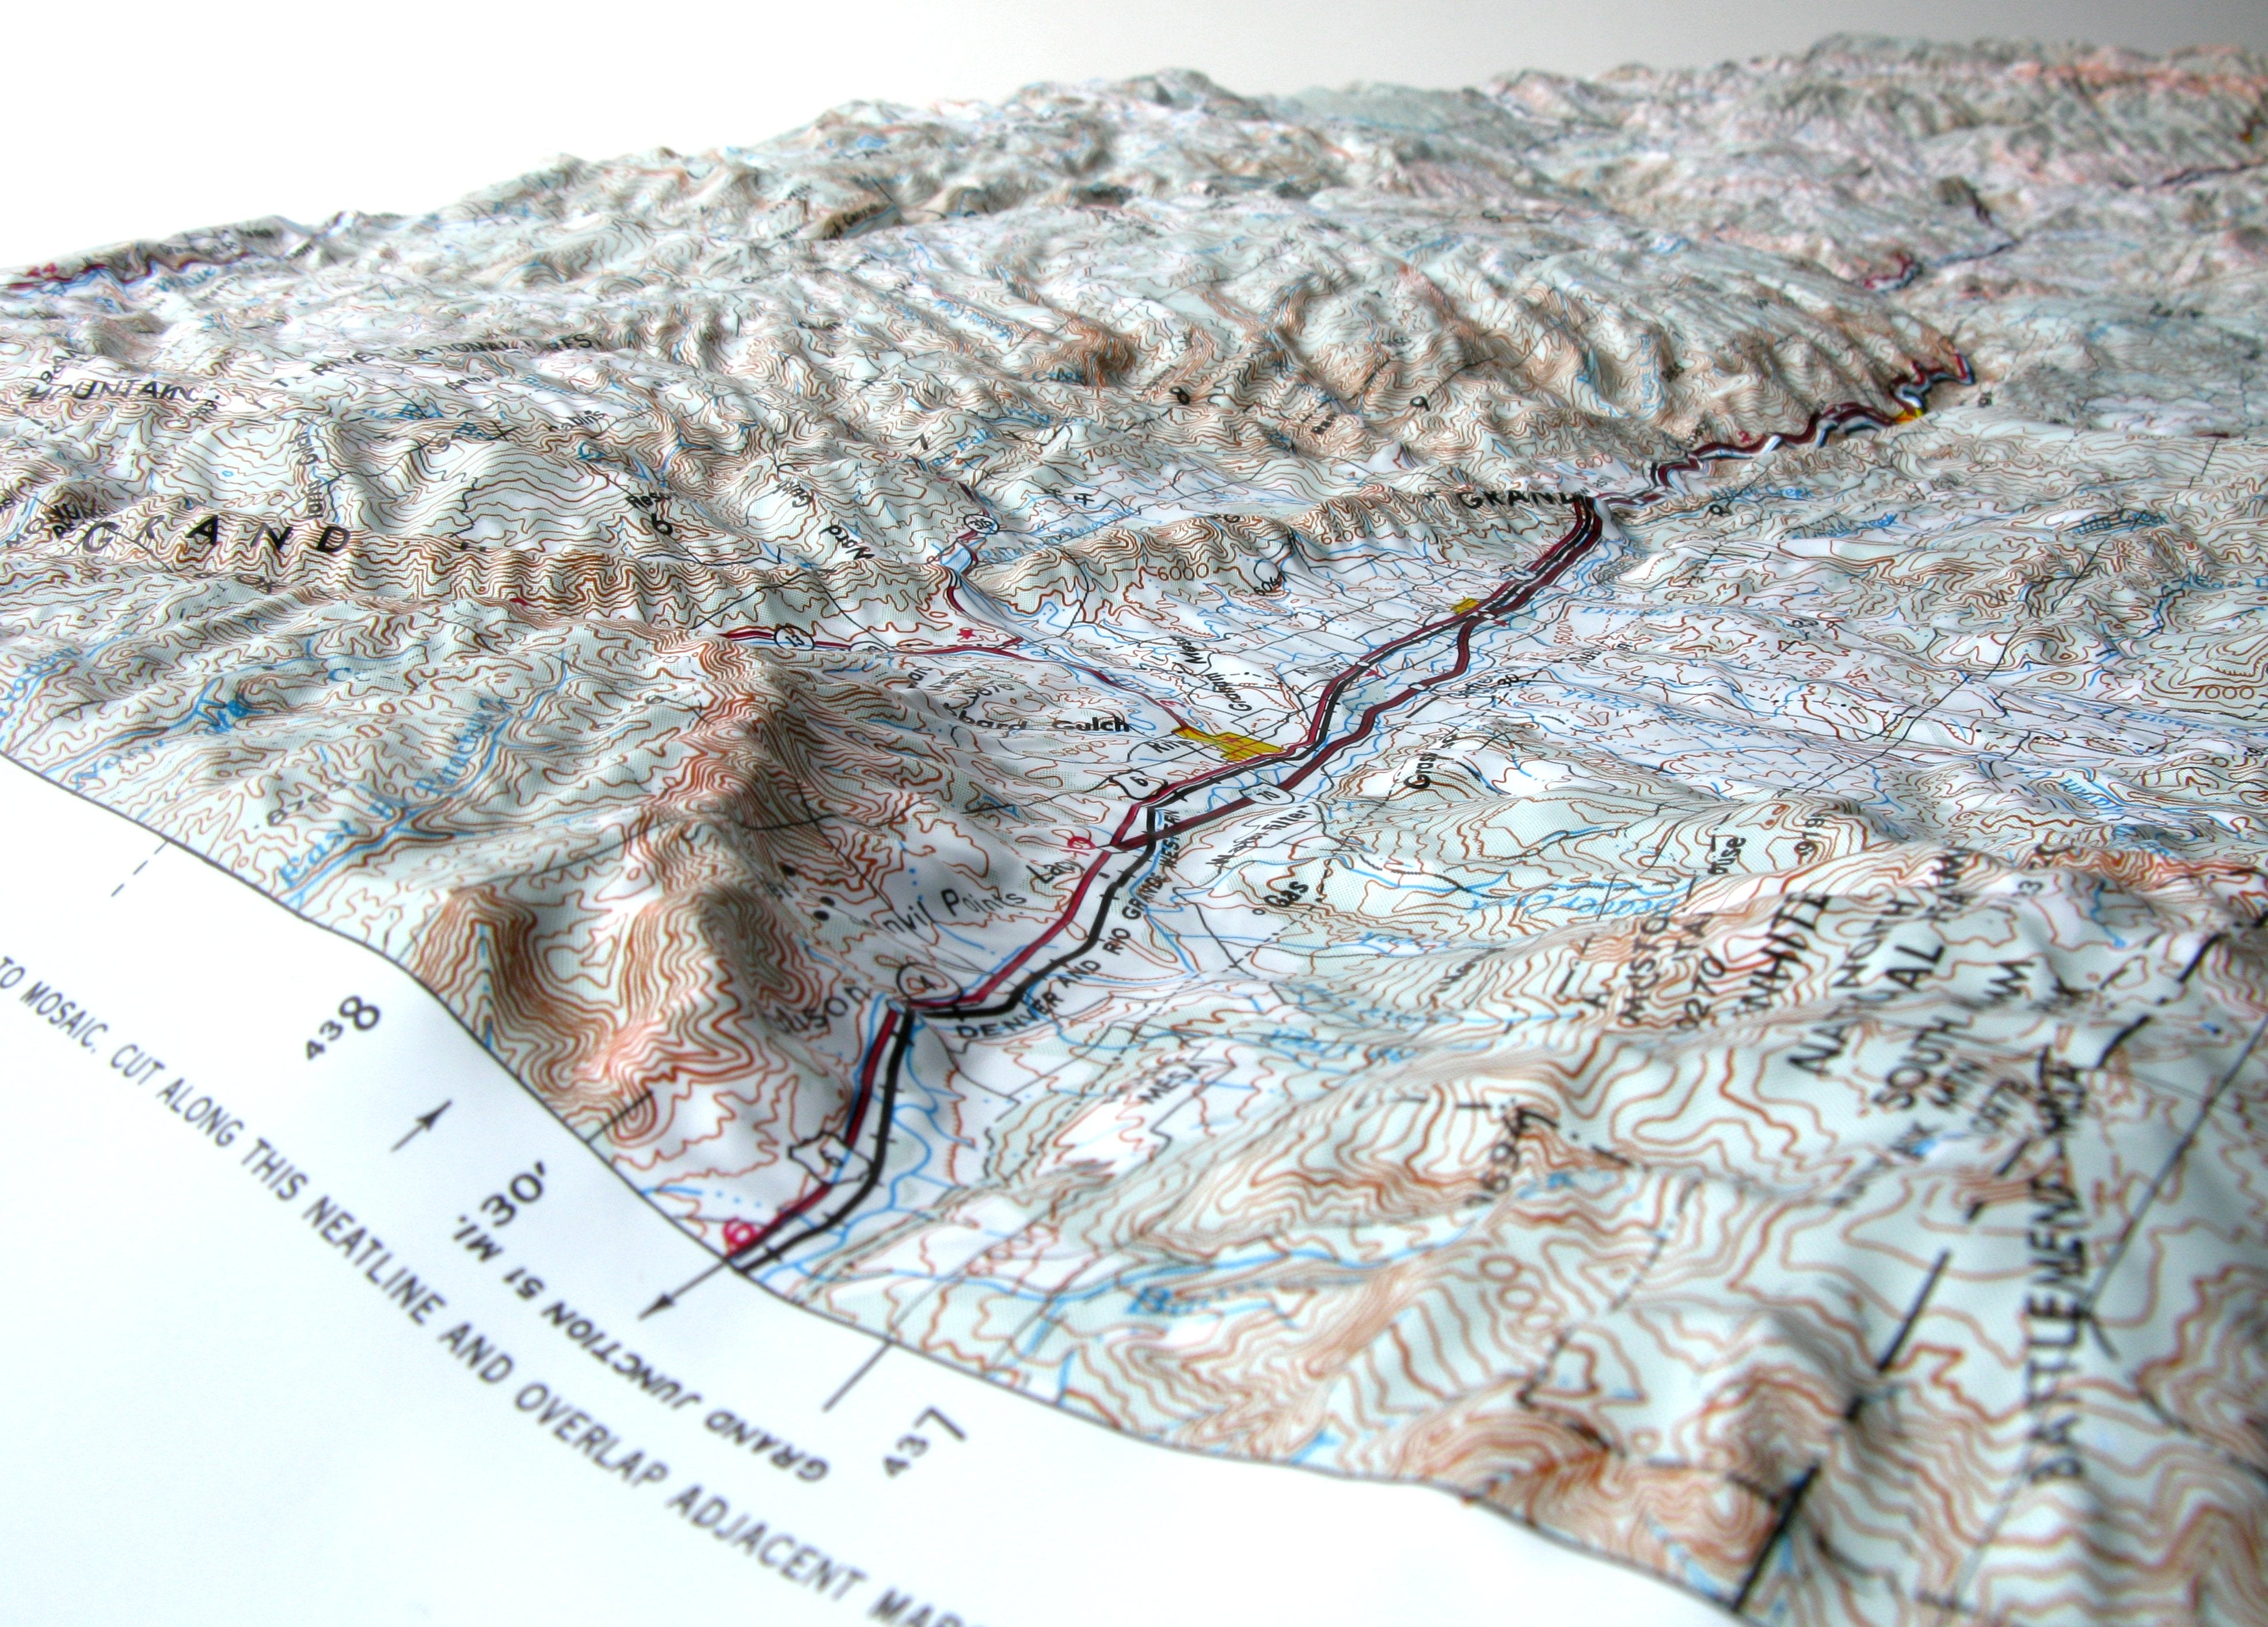 Leadville USGS Regional Three Dimensional 3D Raised Relief Map